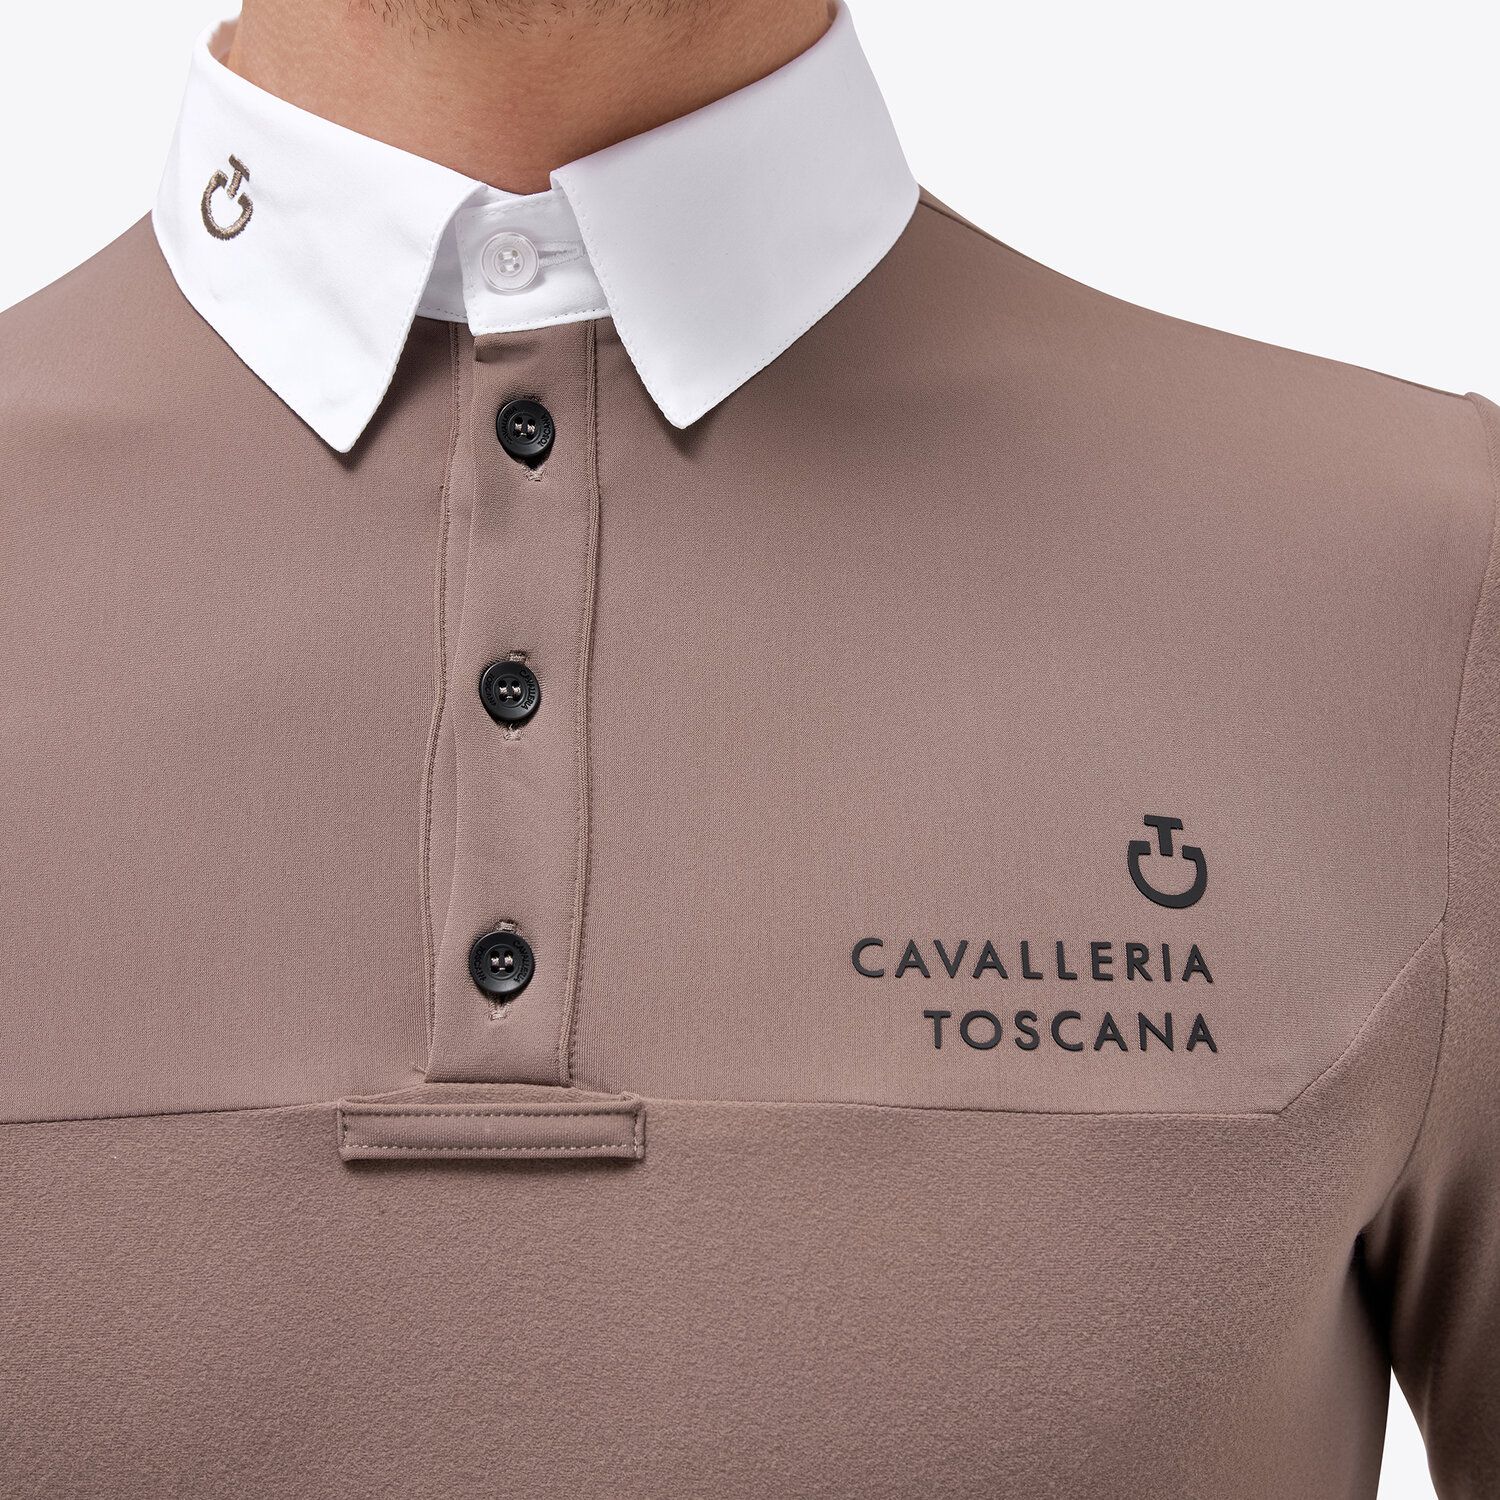 Cavalleria Toscana Men's competition polo shirt DARK CHOCOLATE-3